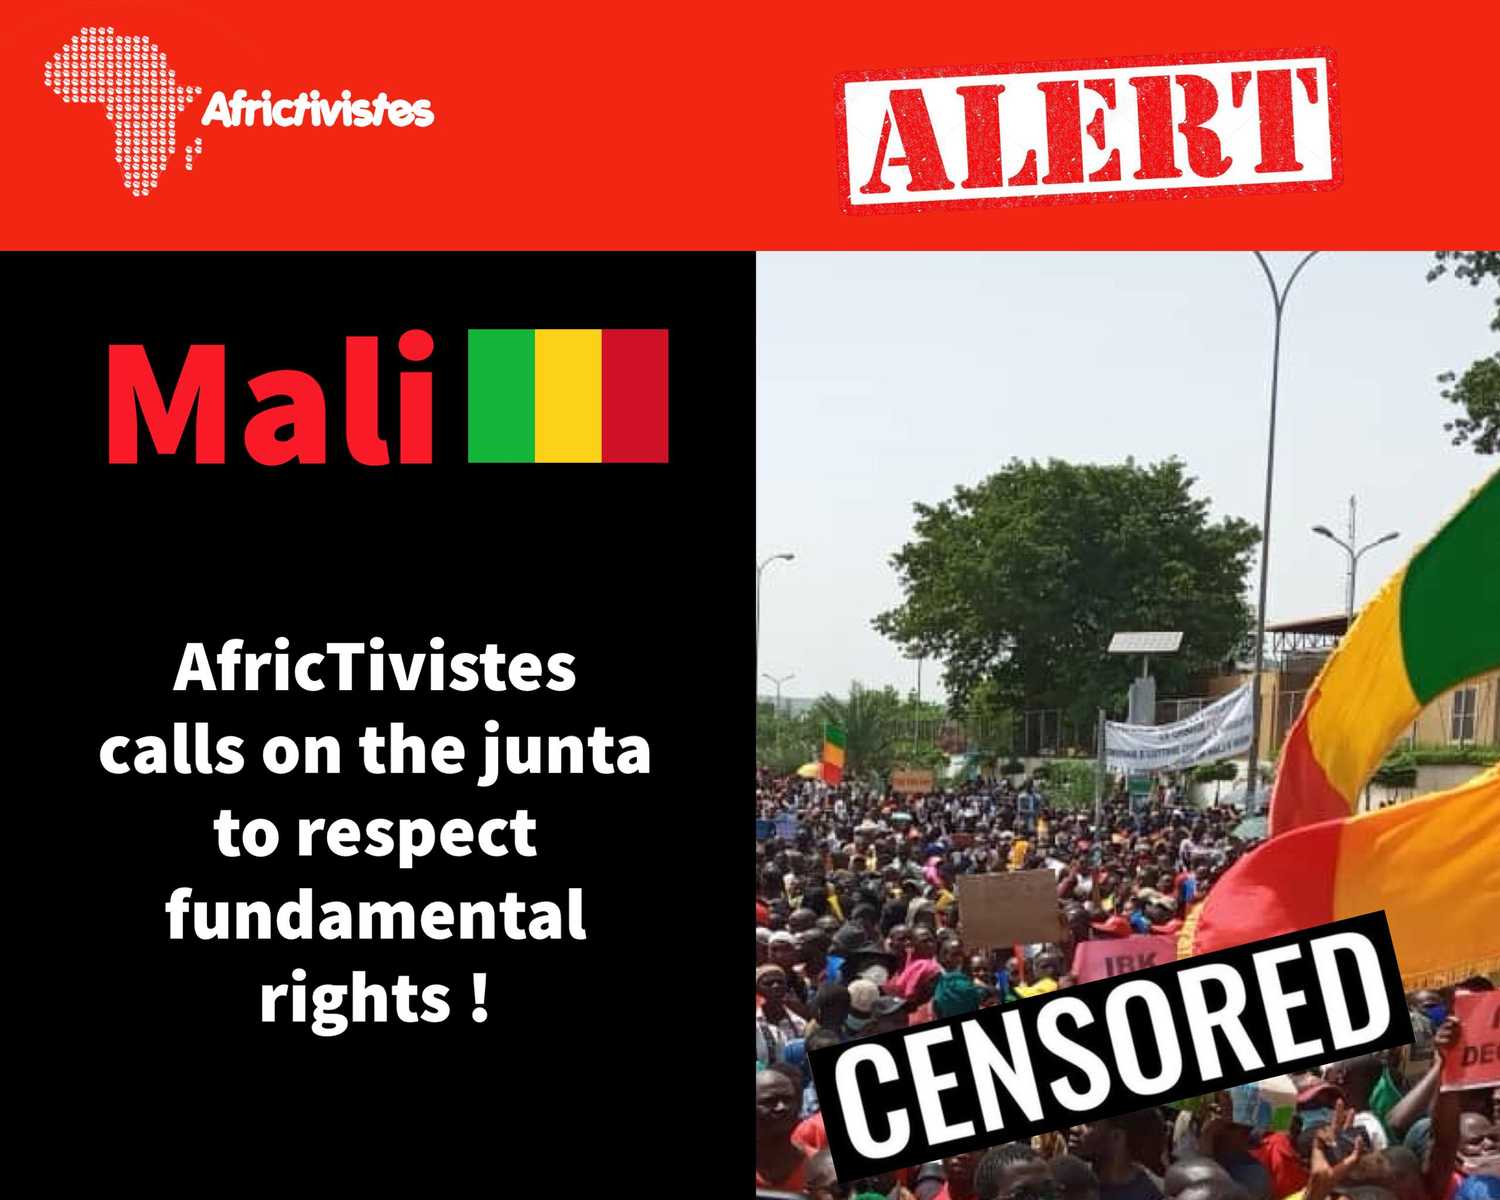 [Mali] AfricTivistes calls on the junta to respect fundamental rights!